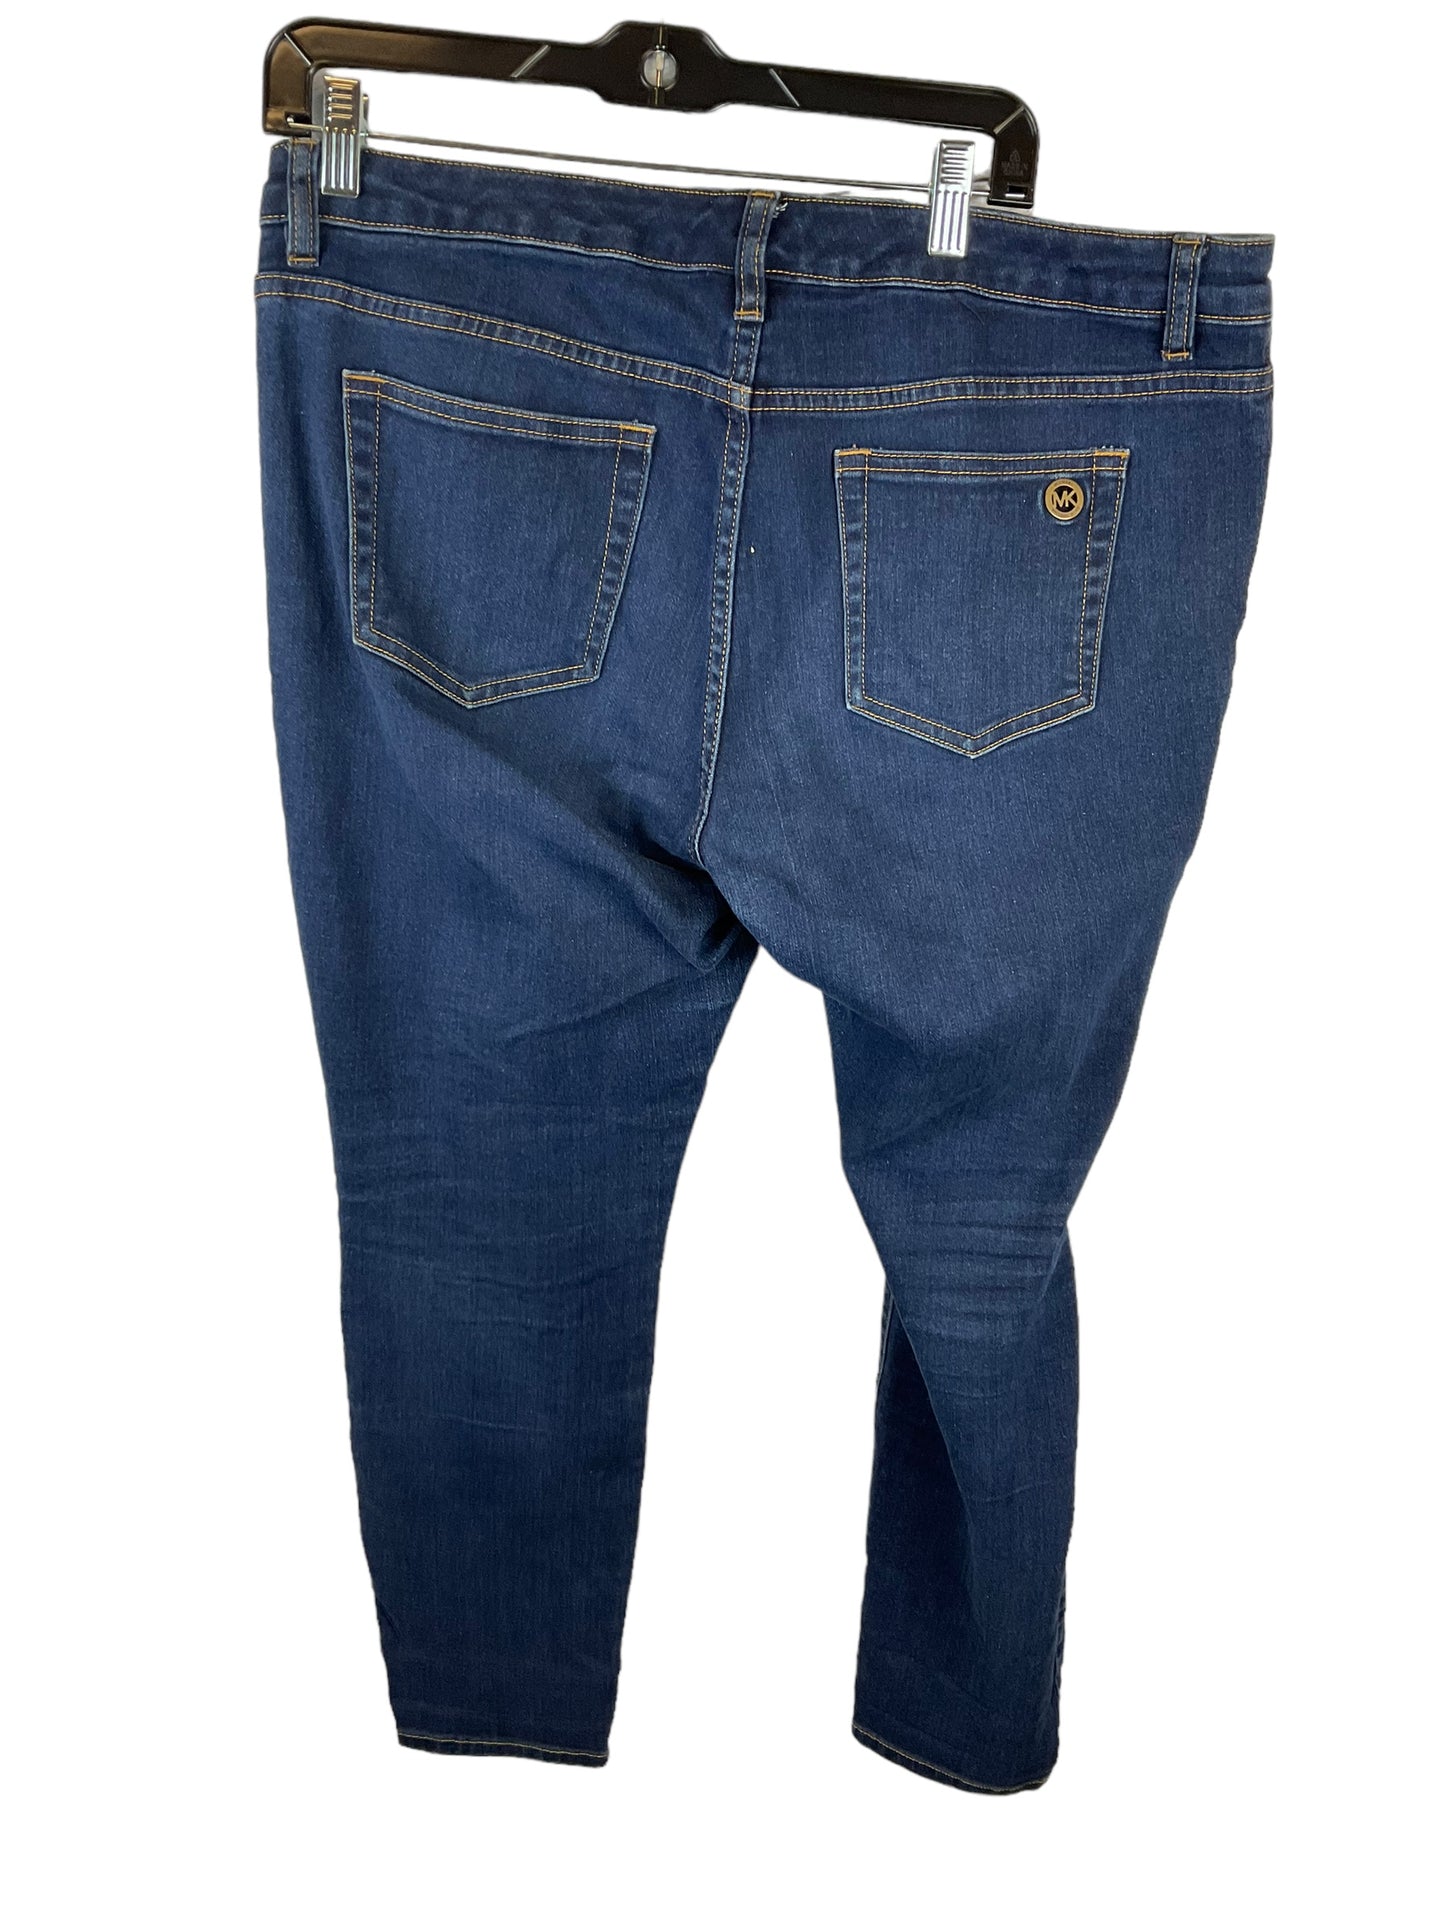 Jeans Designer By Michael Kors  Size: 12